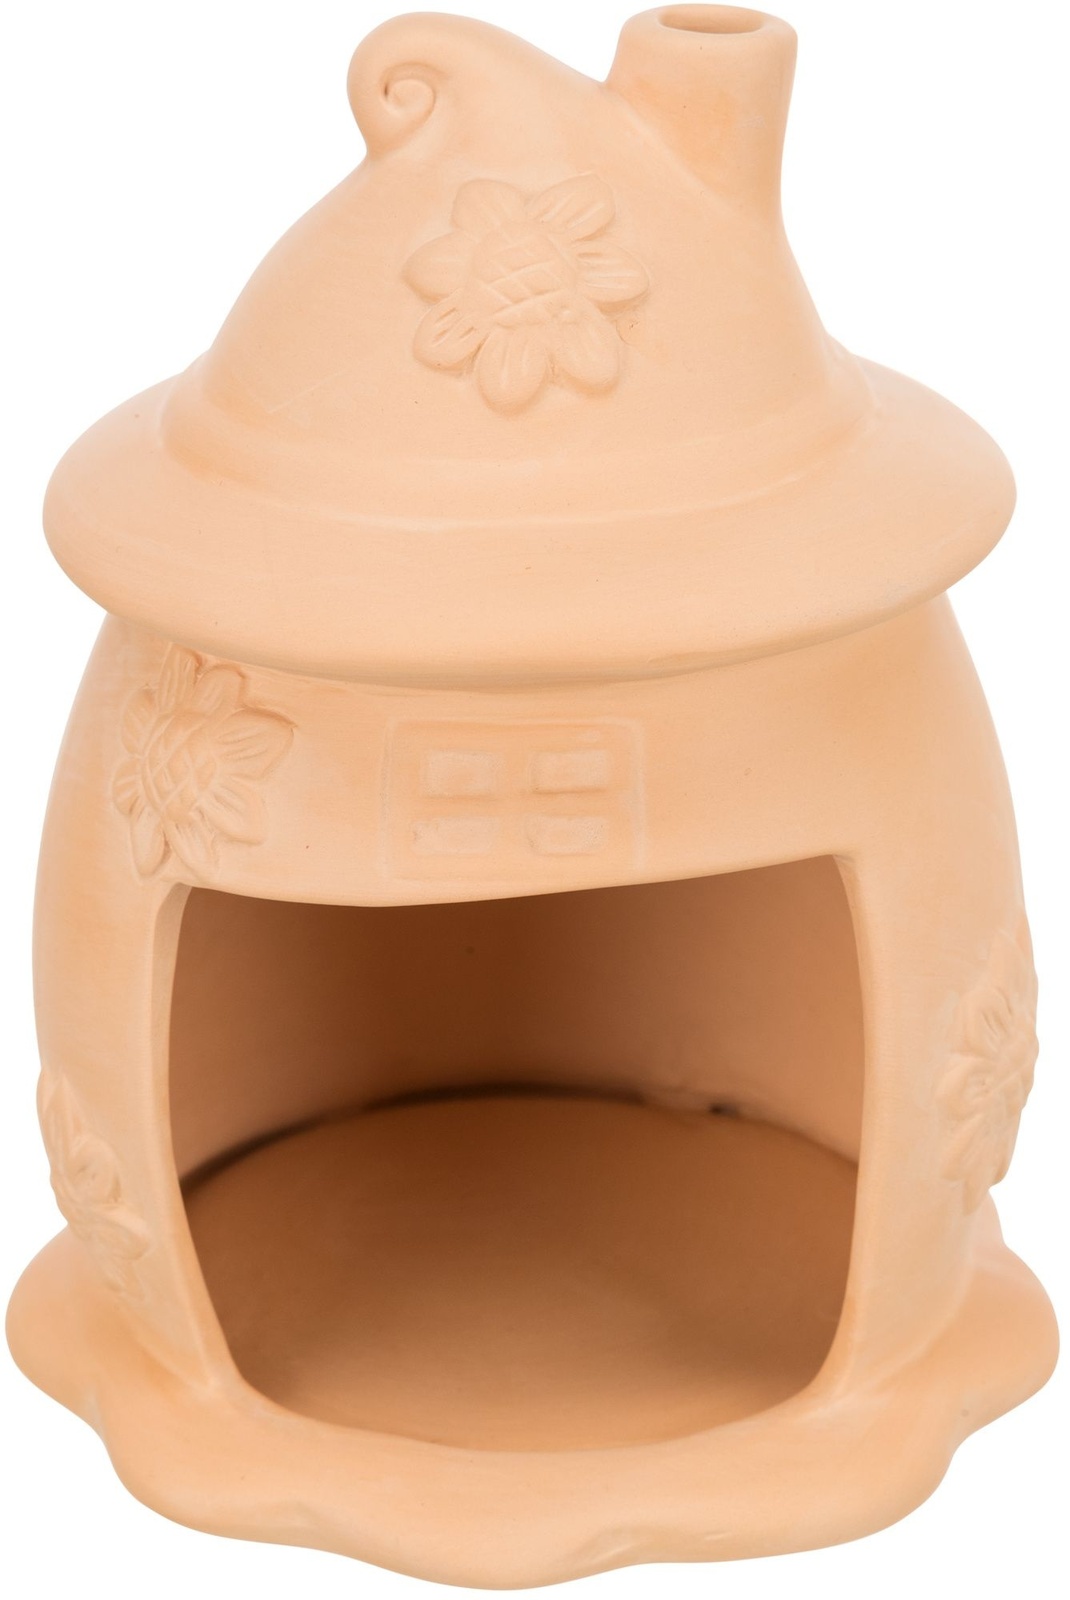 Trixie Trixie домик для мышей, керамика, терракотовый (330 г) trixie trixie домик для мышей керамика терракотовый 246 г